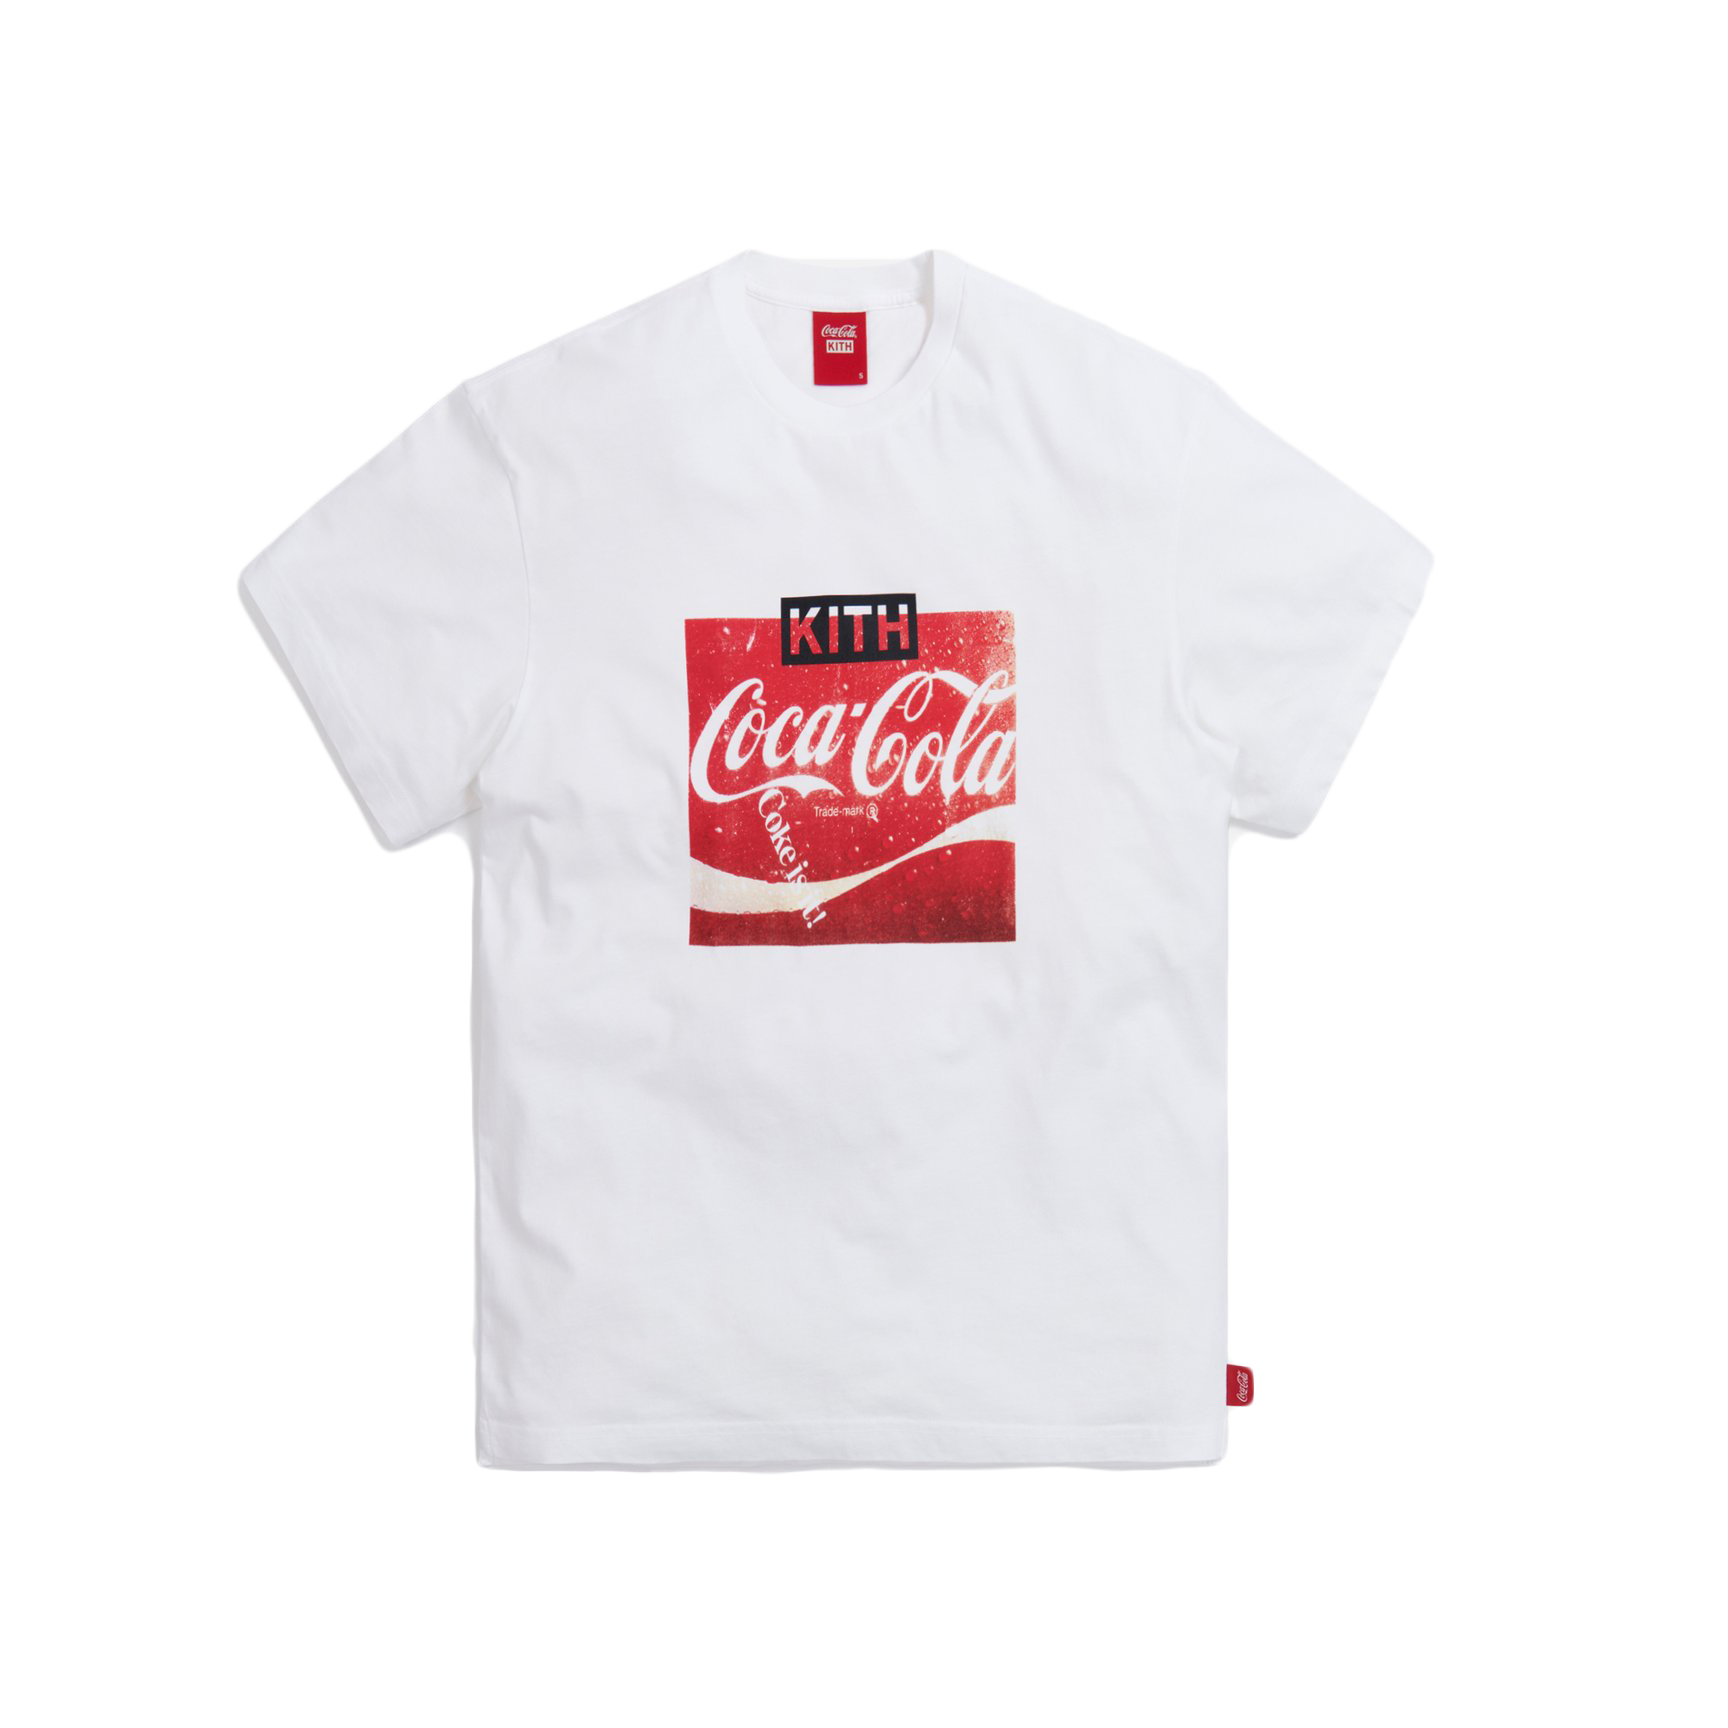 Kith Coca Cola Tee XL Navy Tシャツ 日本未発売